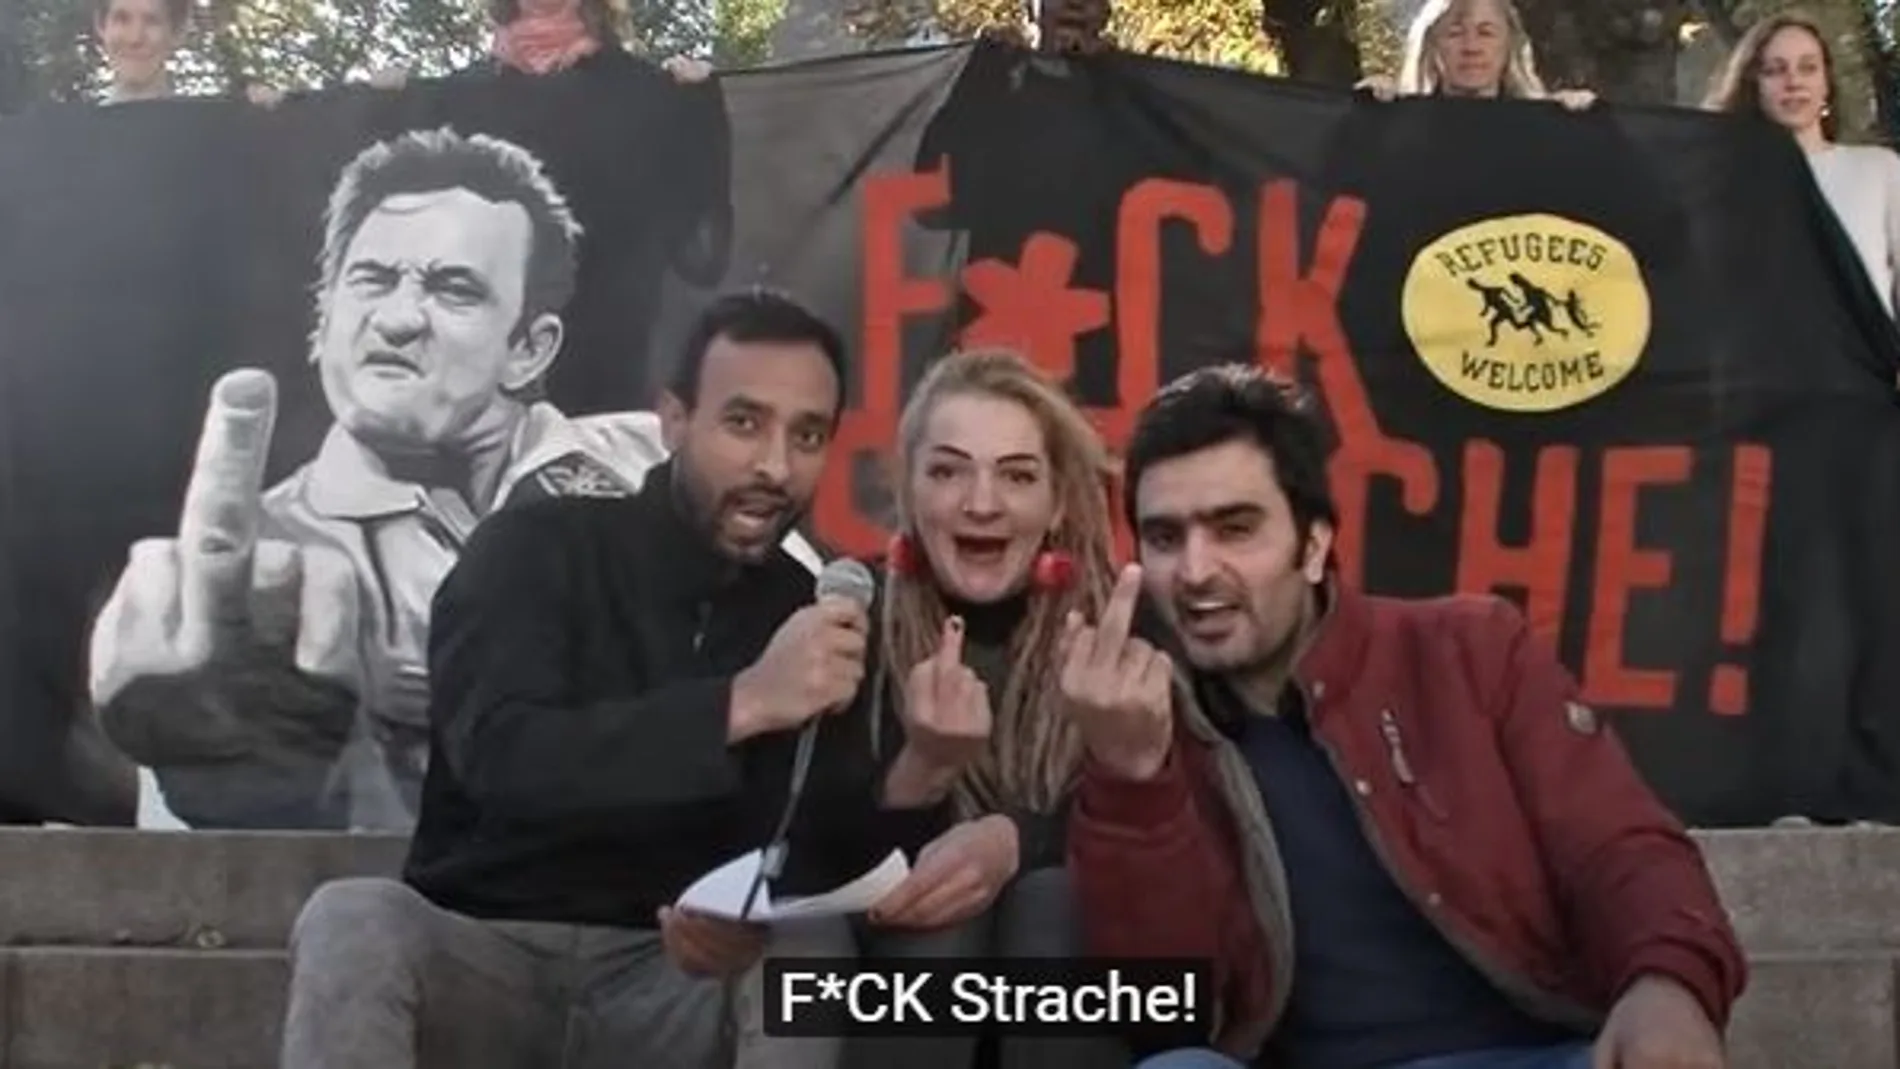 Miembros del grupo trotskista "Linkswende"hacen peinetas al ultraderechista Strache